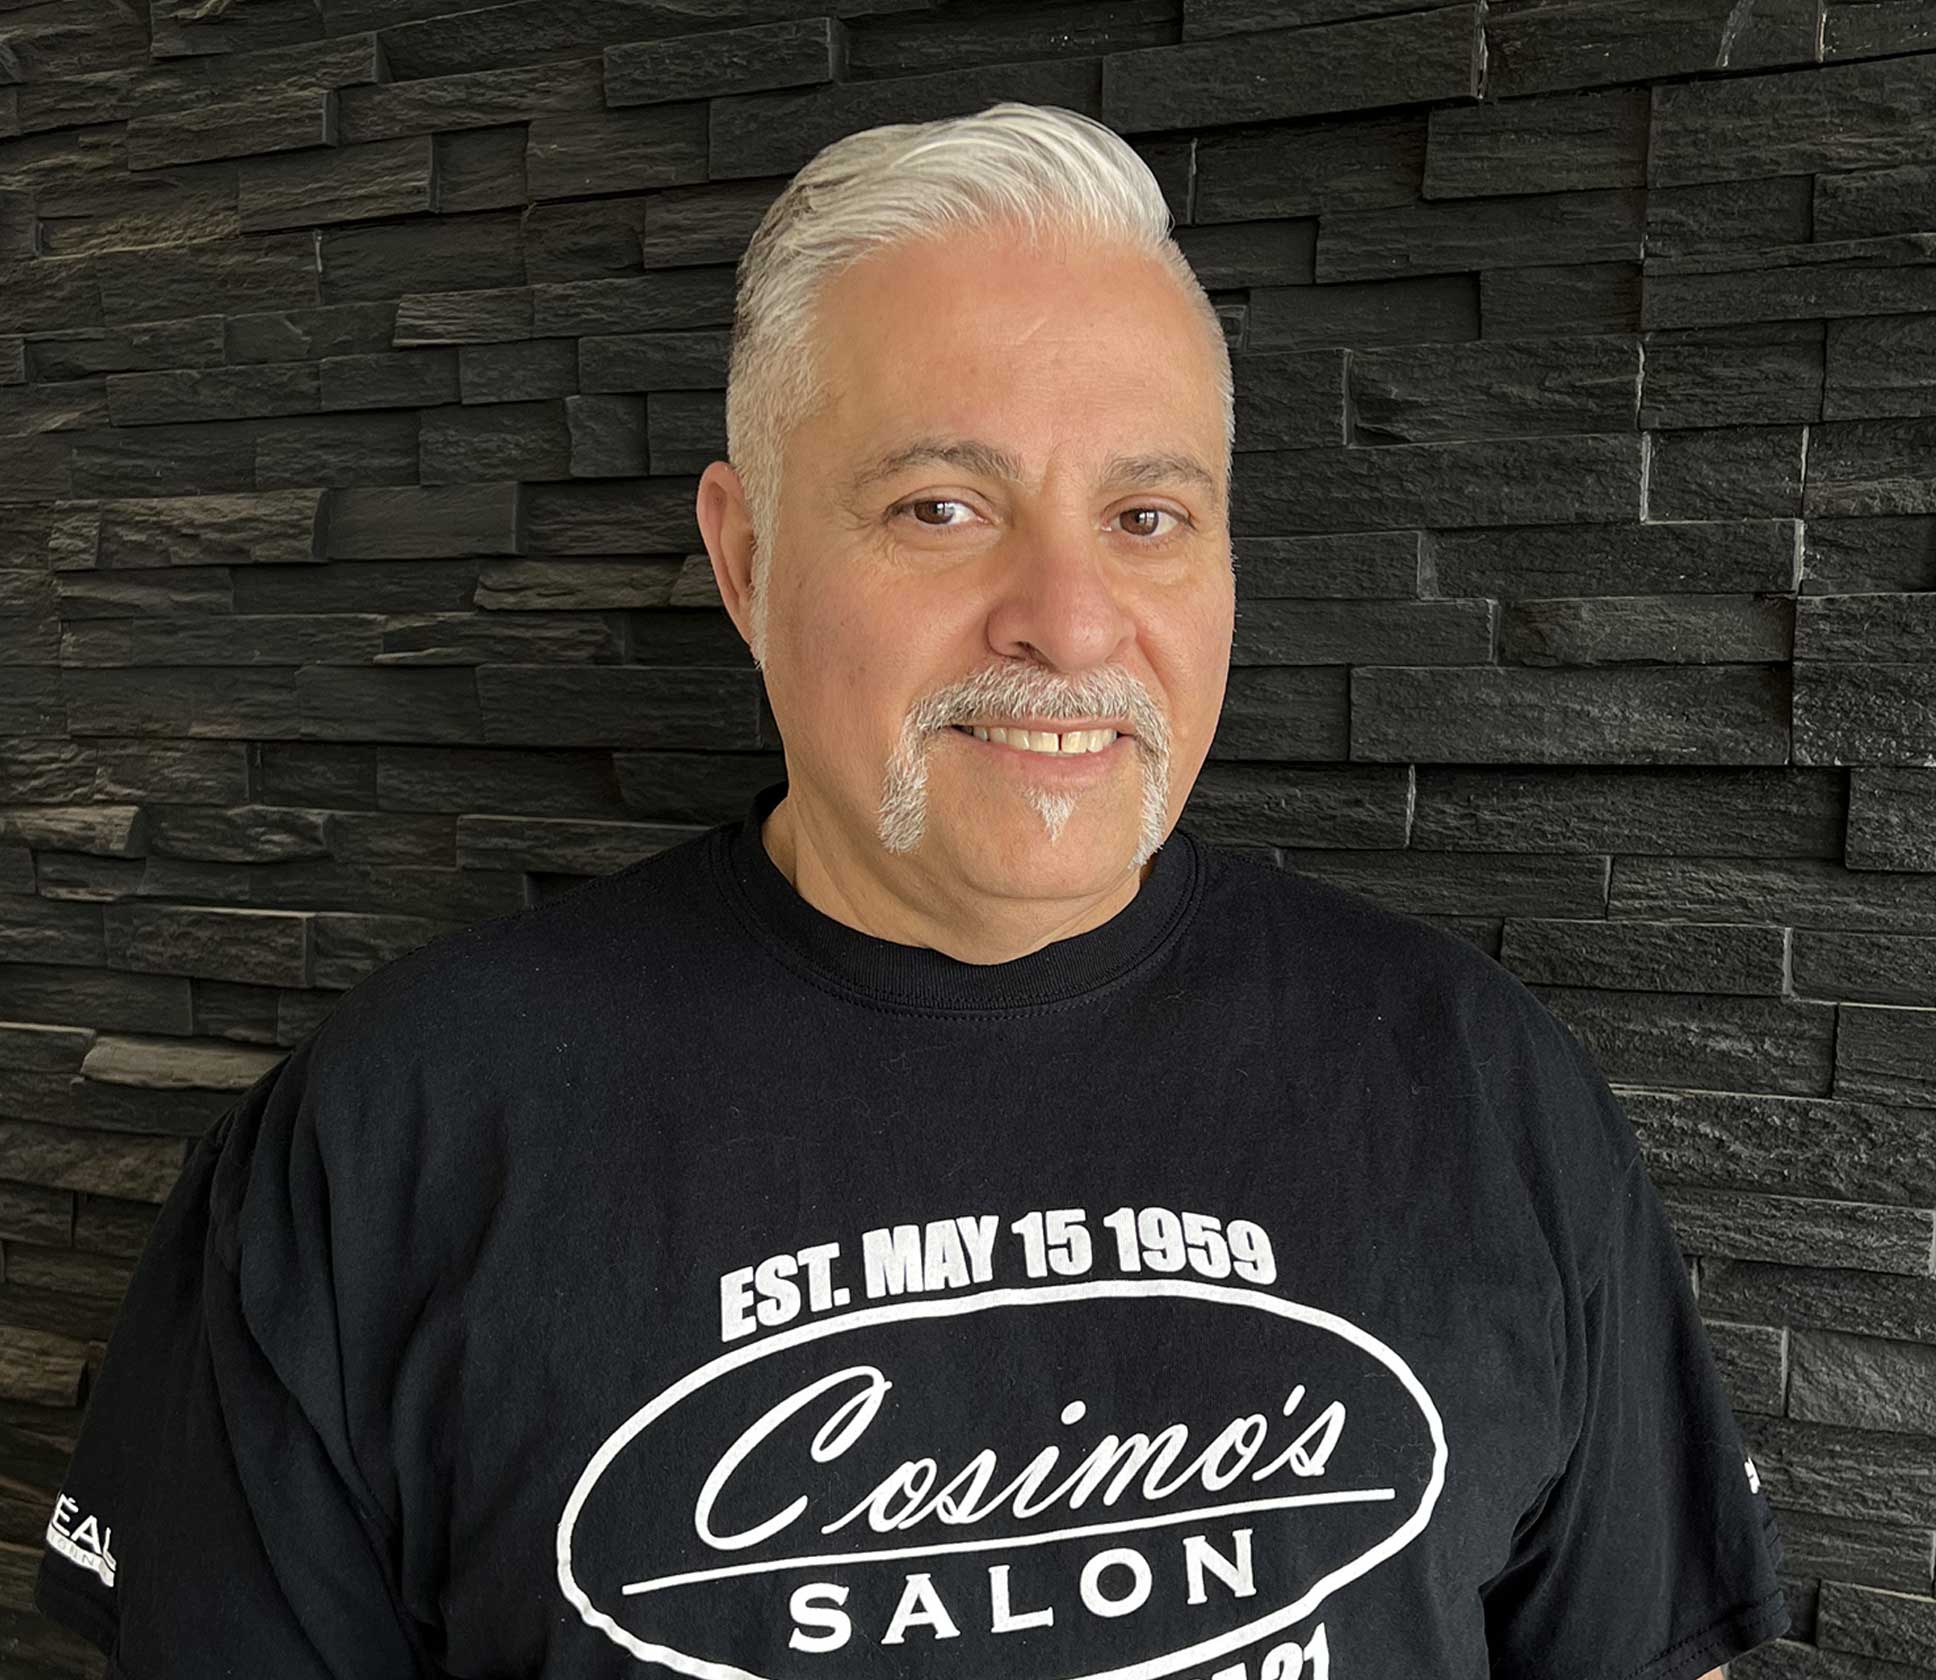 Tony Racco Cosimos Salon Burlington